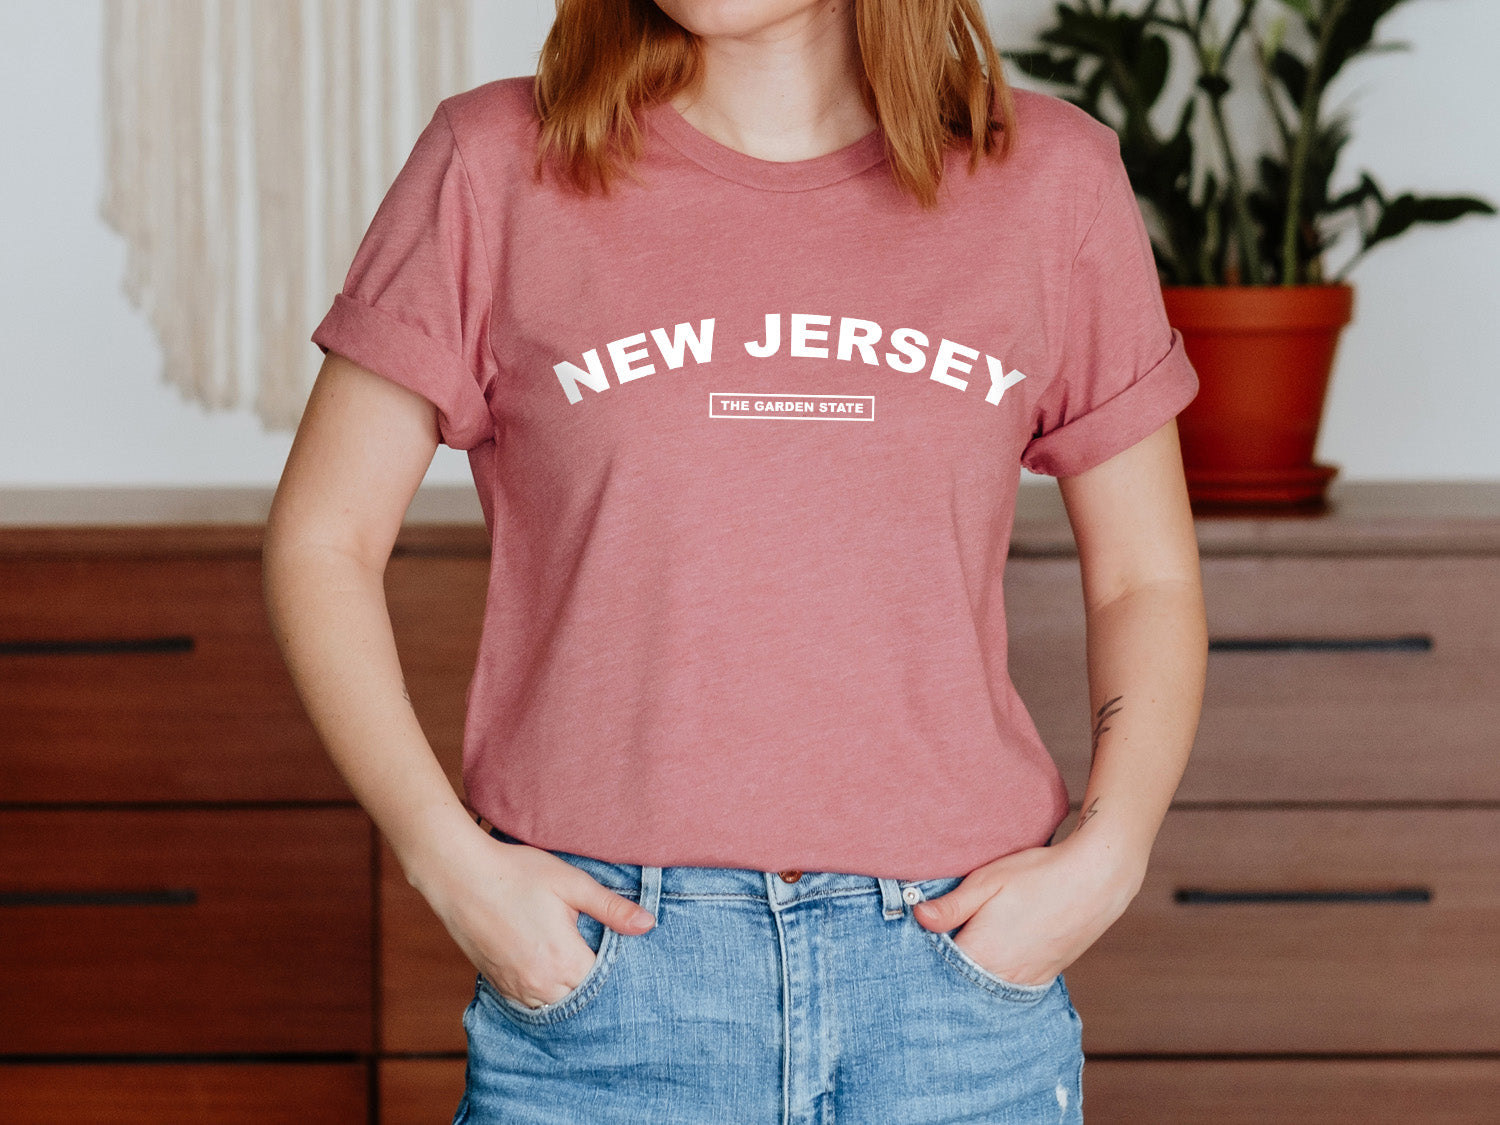 New Jersey The Garden State T-shirt - United States Name & Slogan Minimal Design Printed Tee Shirt